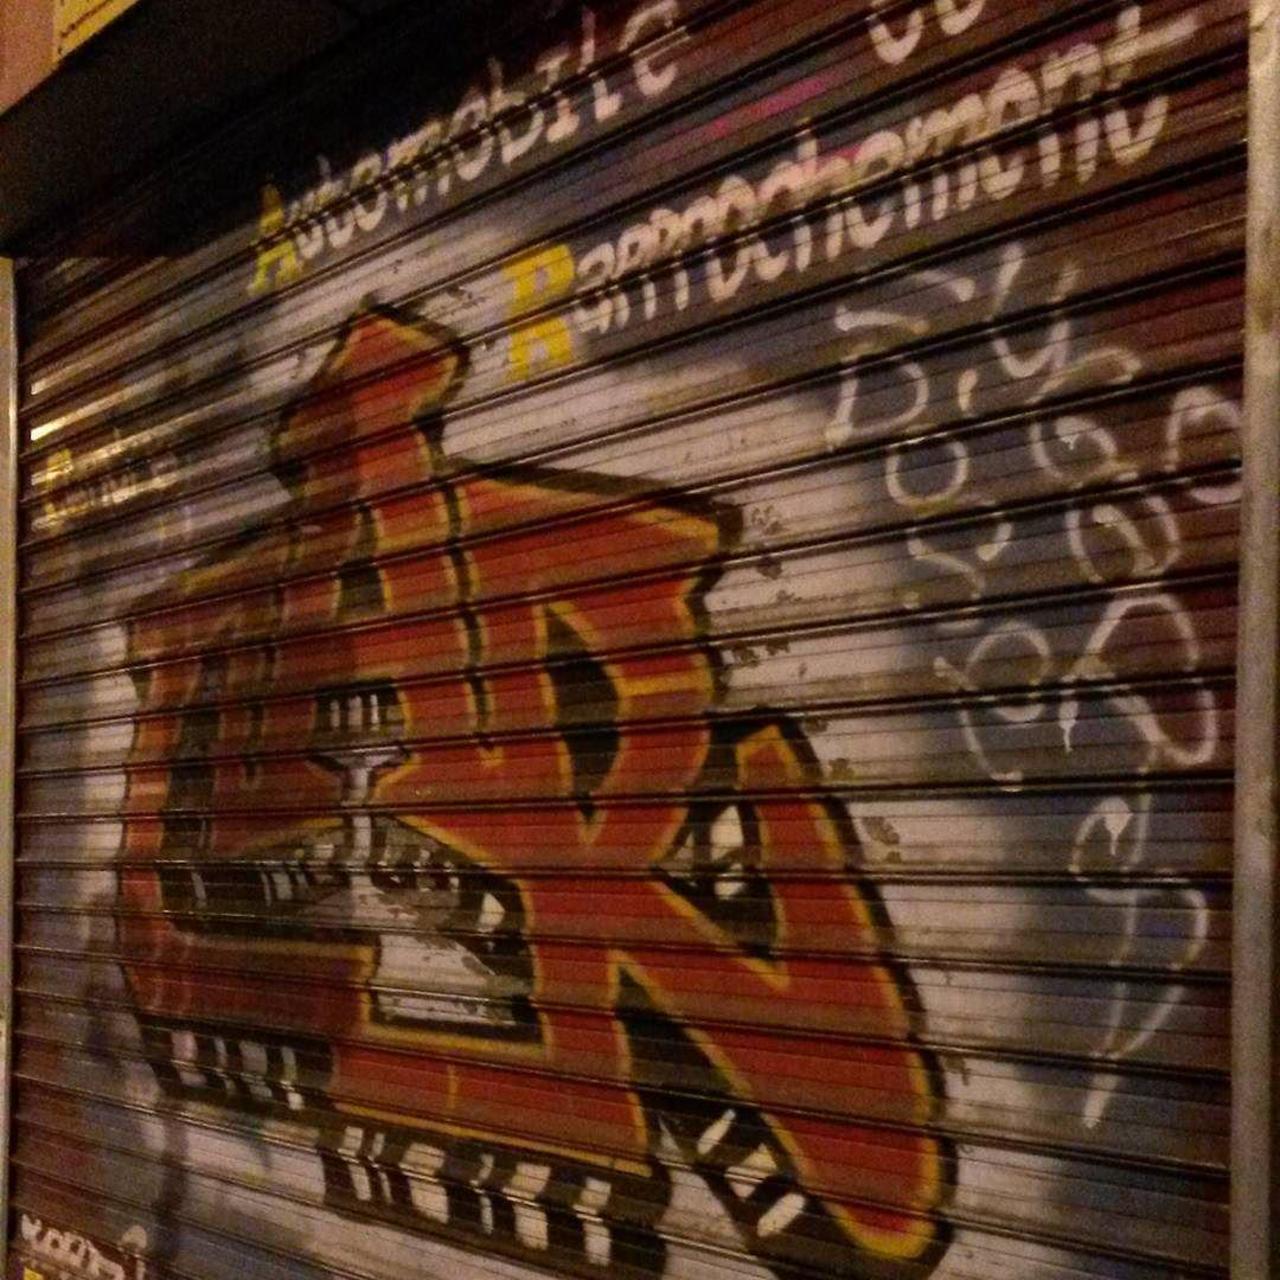 #Paris #graffiti photo by @le_cyclopede http://ift.tt/1kb78bd #StreetArt http://t.co/NxQw0Hpisj